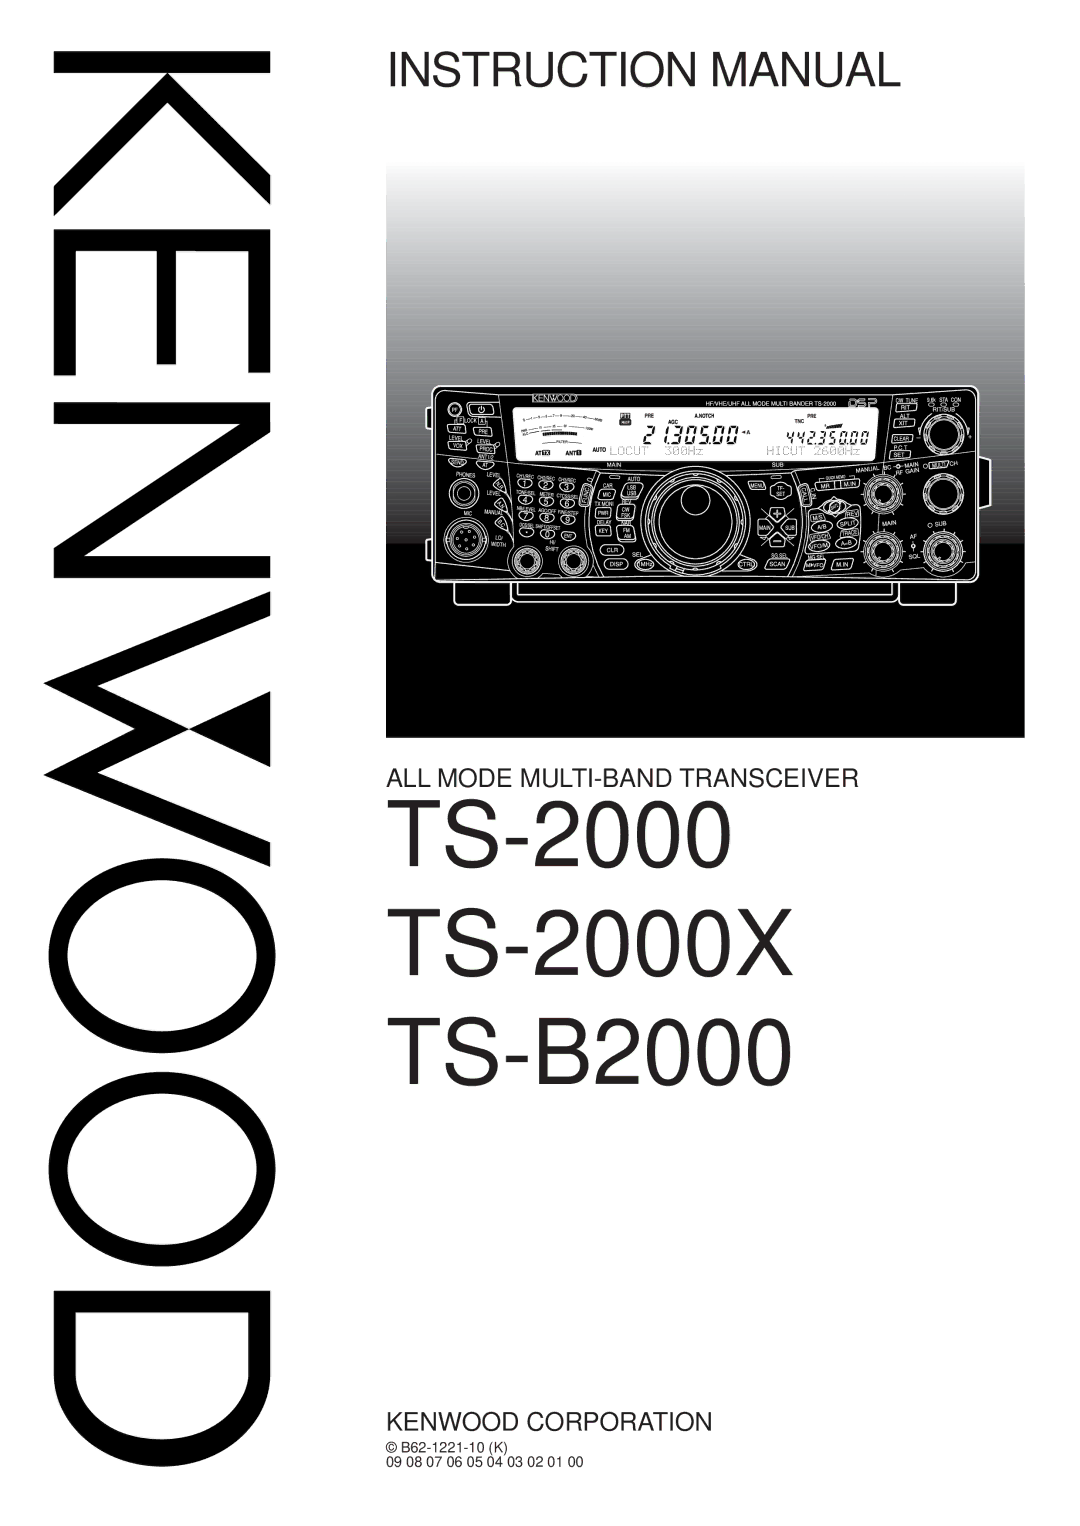 Kenwood instruction manual TS-2000 TS-2000X TS-B2000 